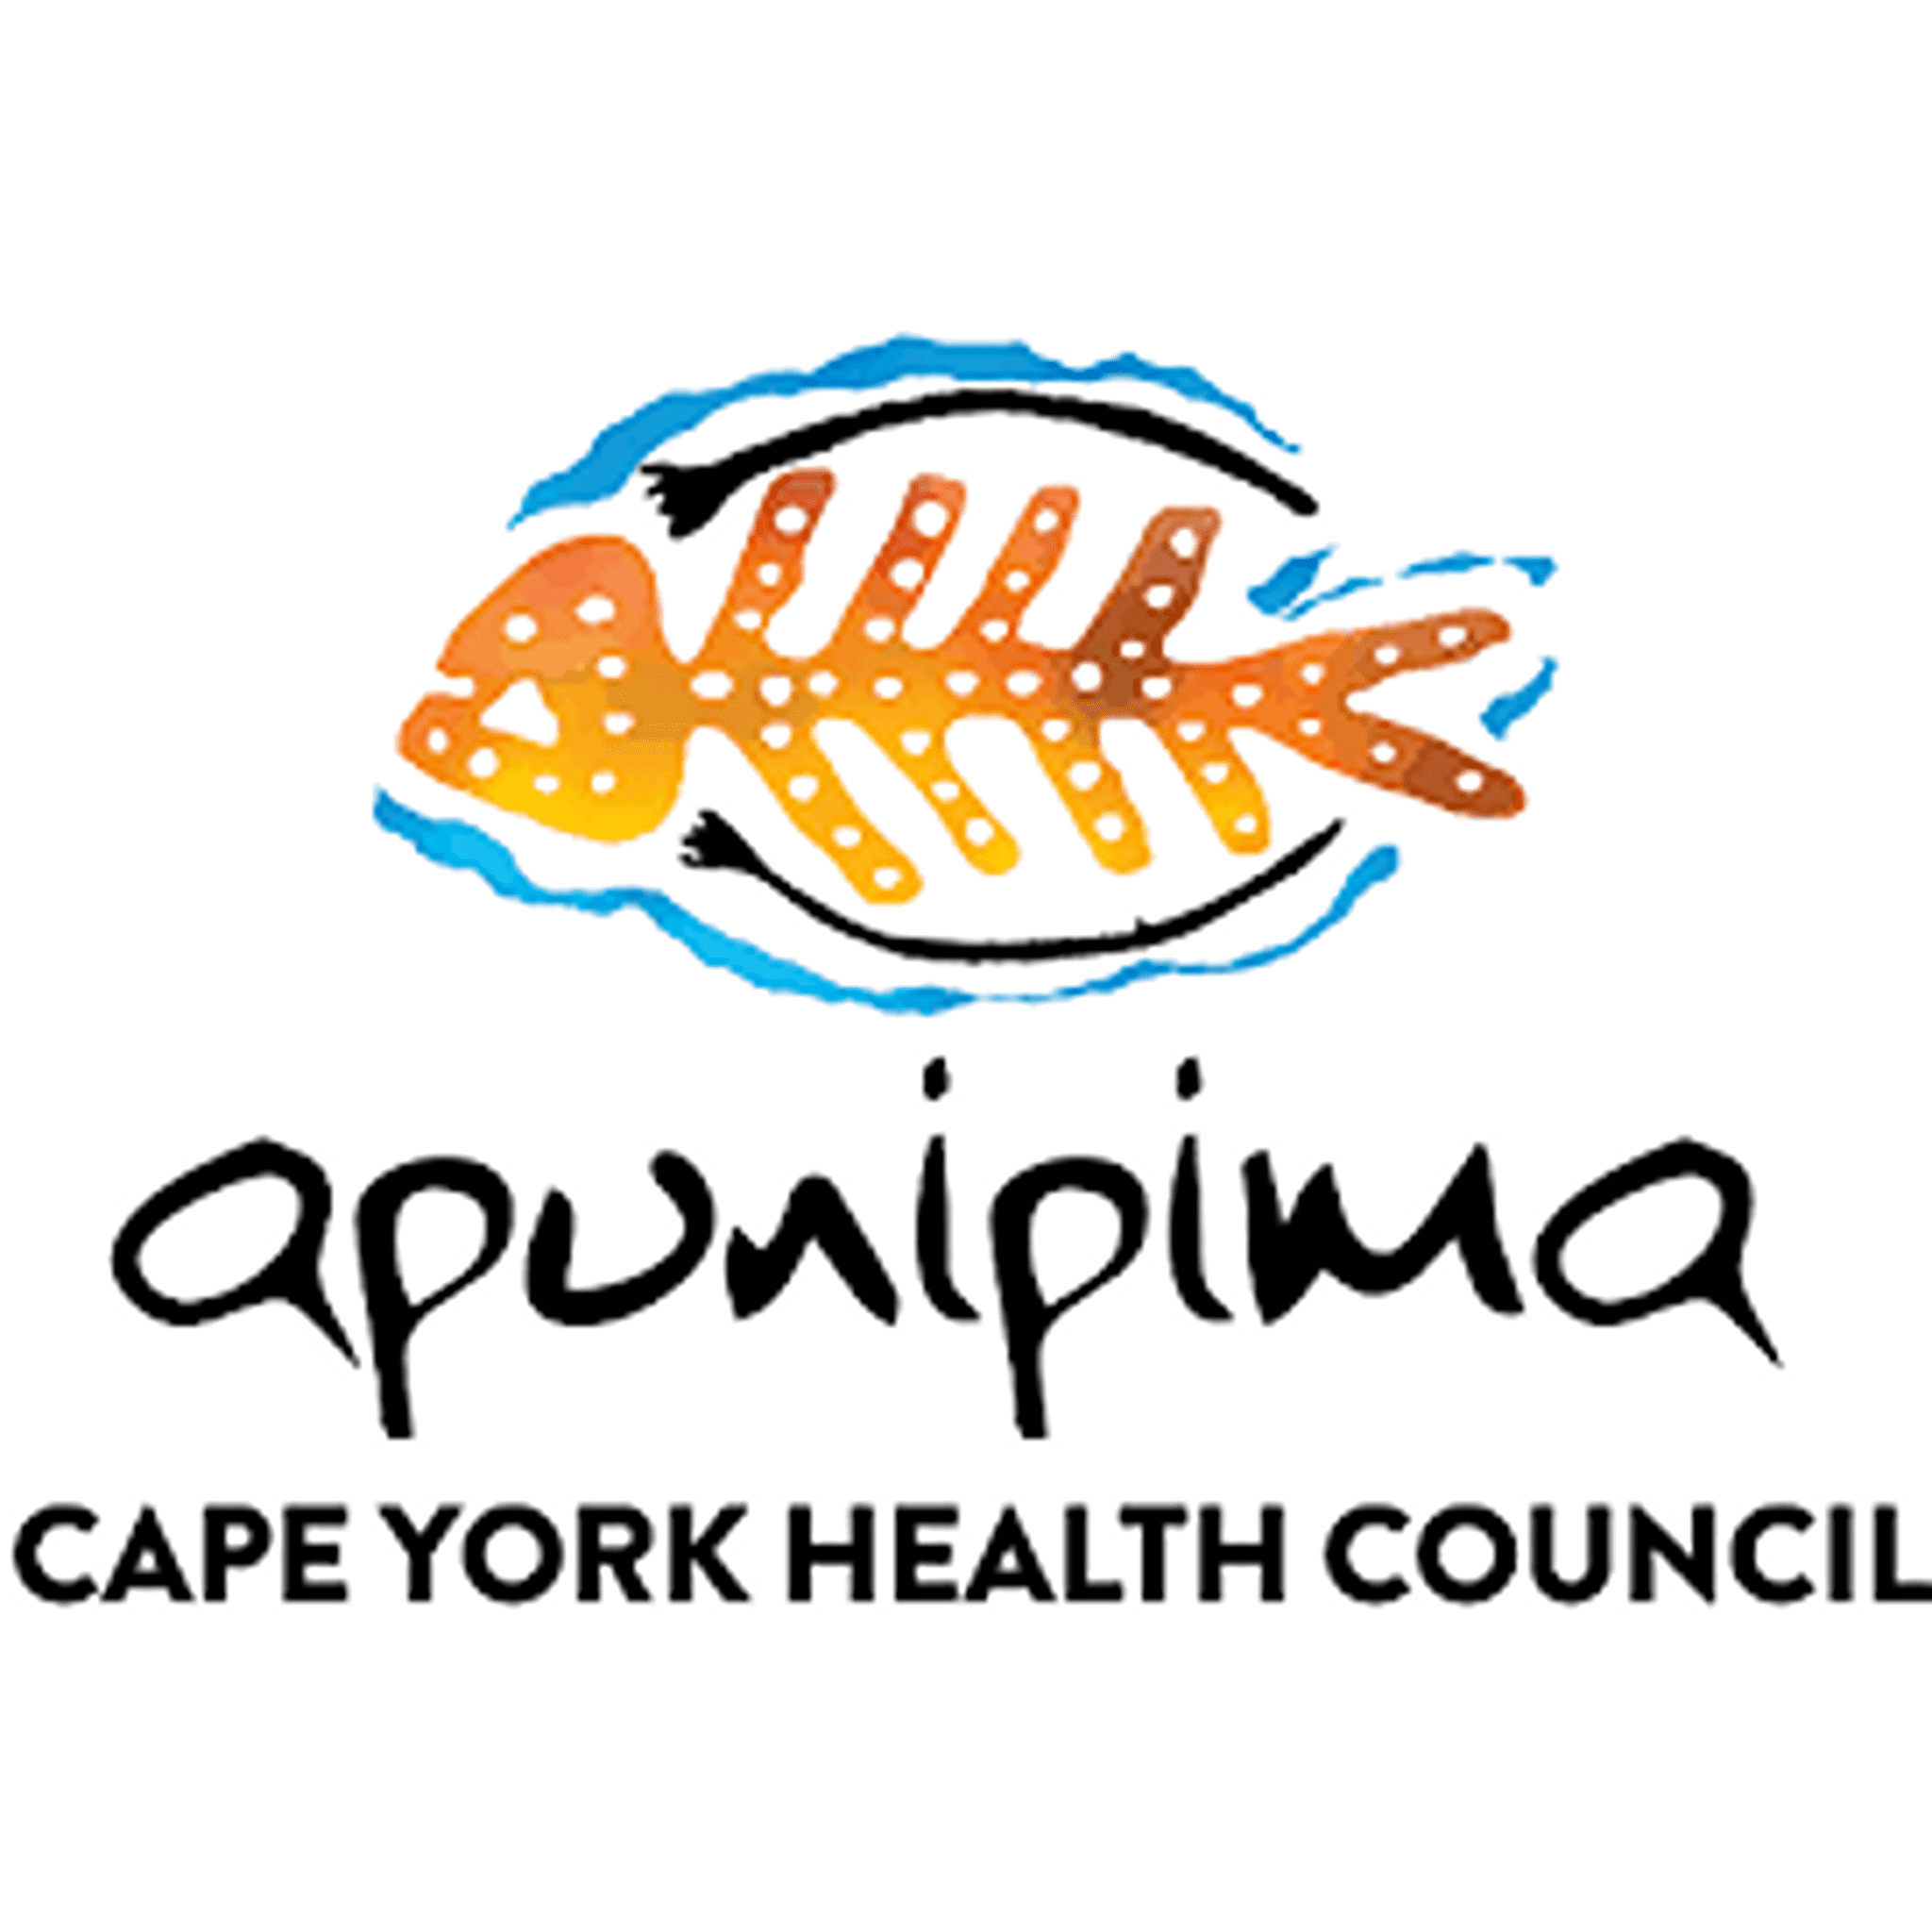 Cape York Health Council